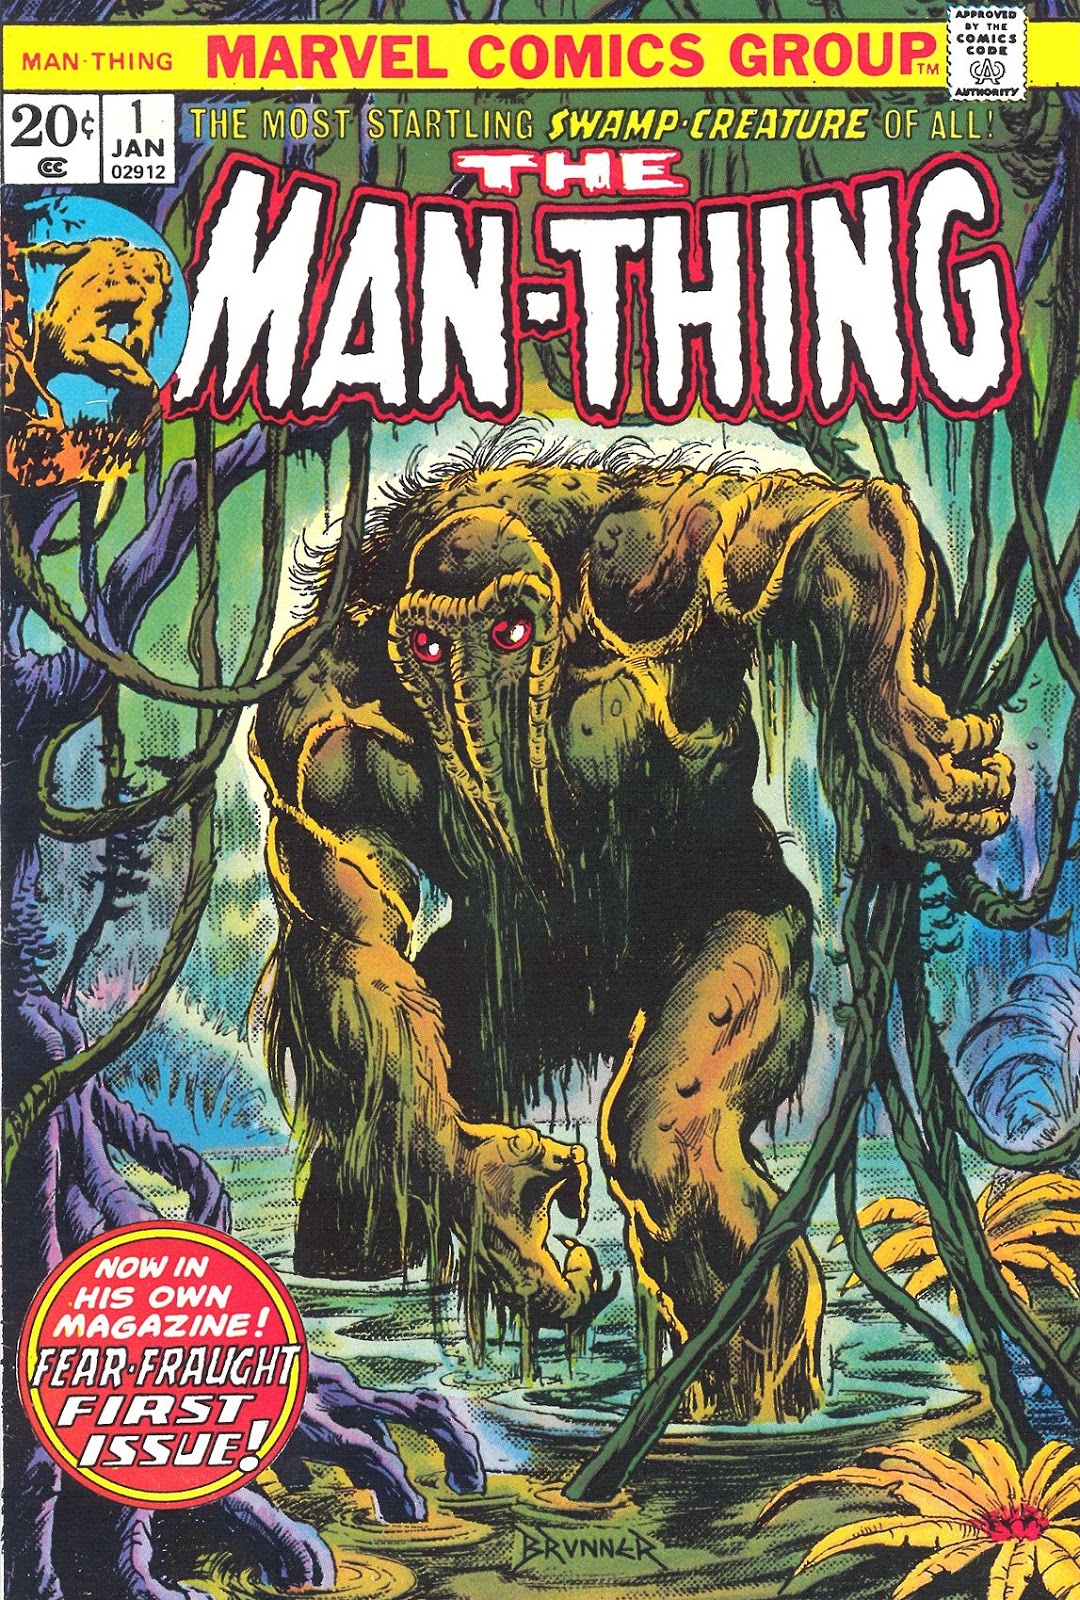 MONSTER MAGAZINE WORLD: MARVEL'S MAN-THING ORIGINAL ART